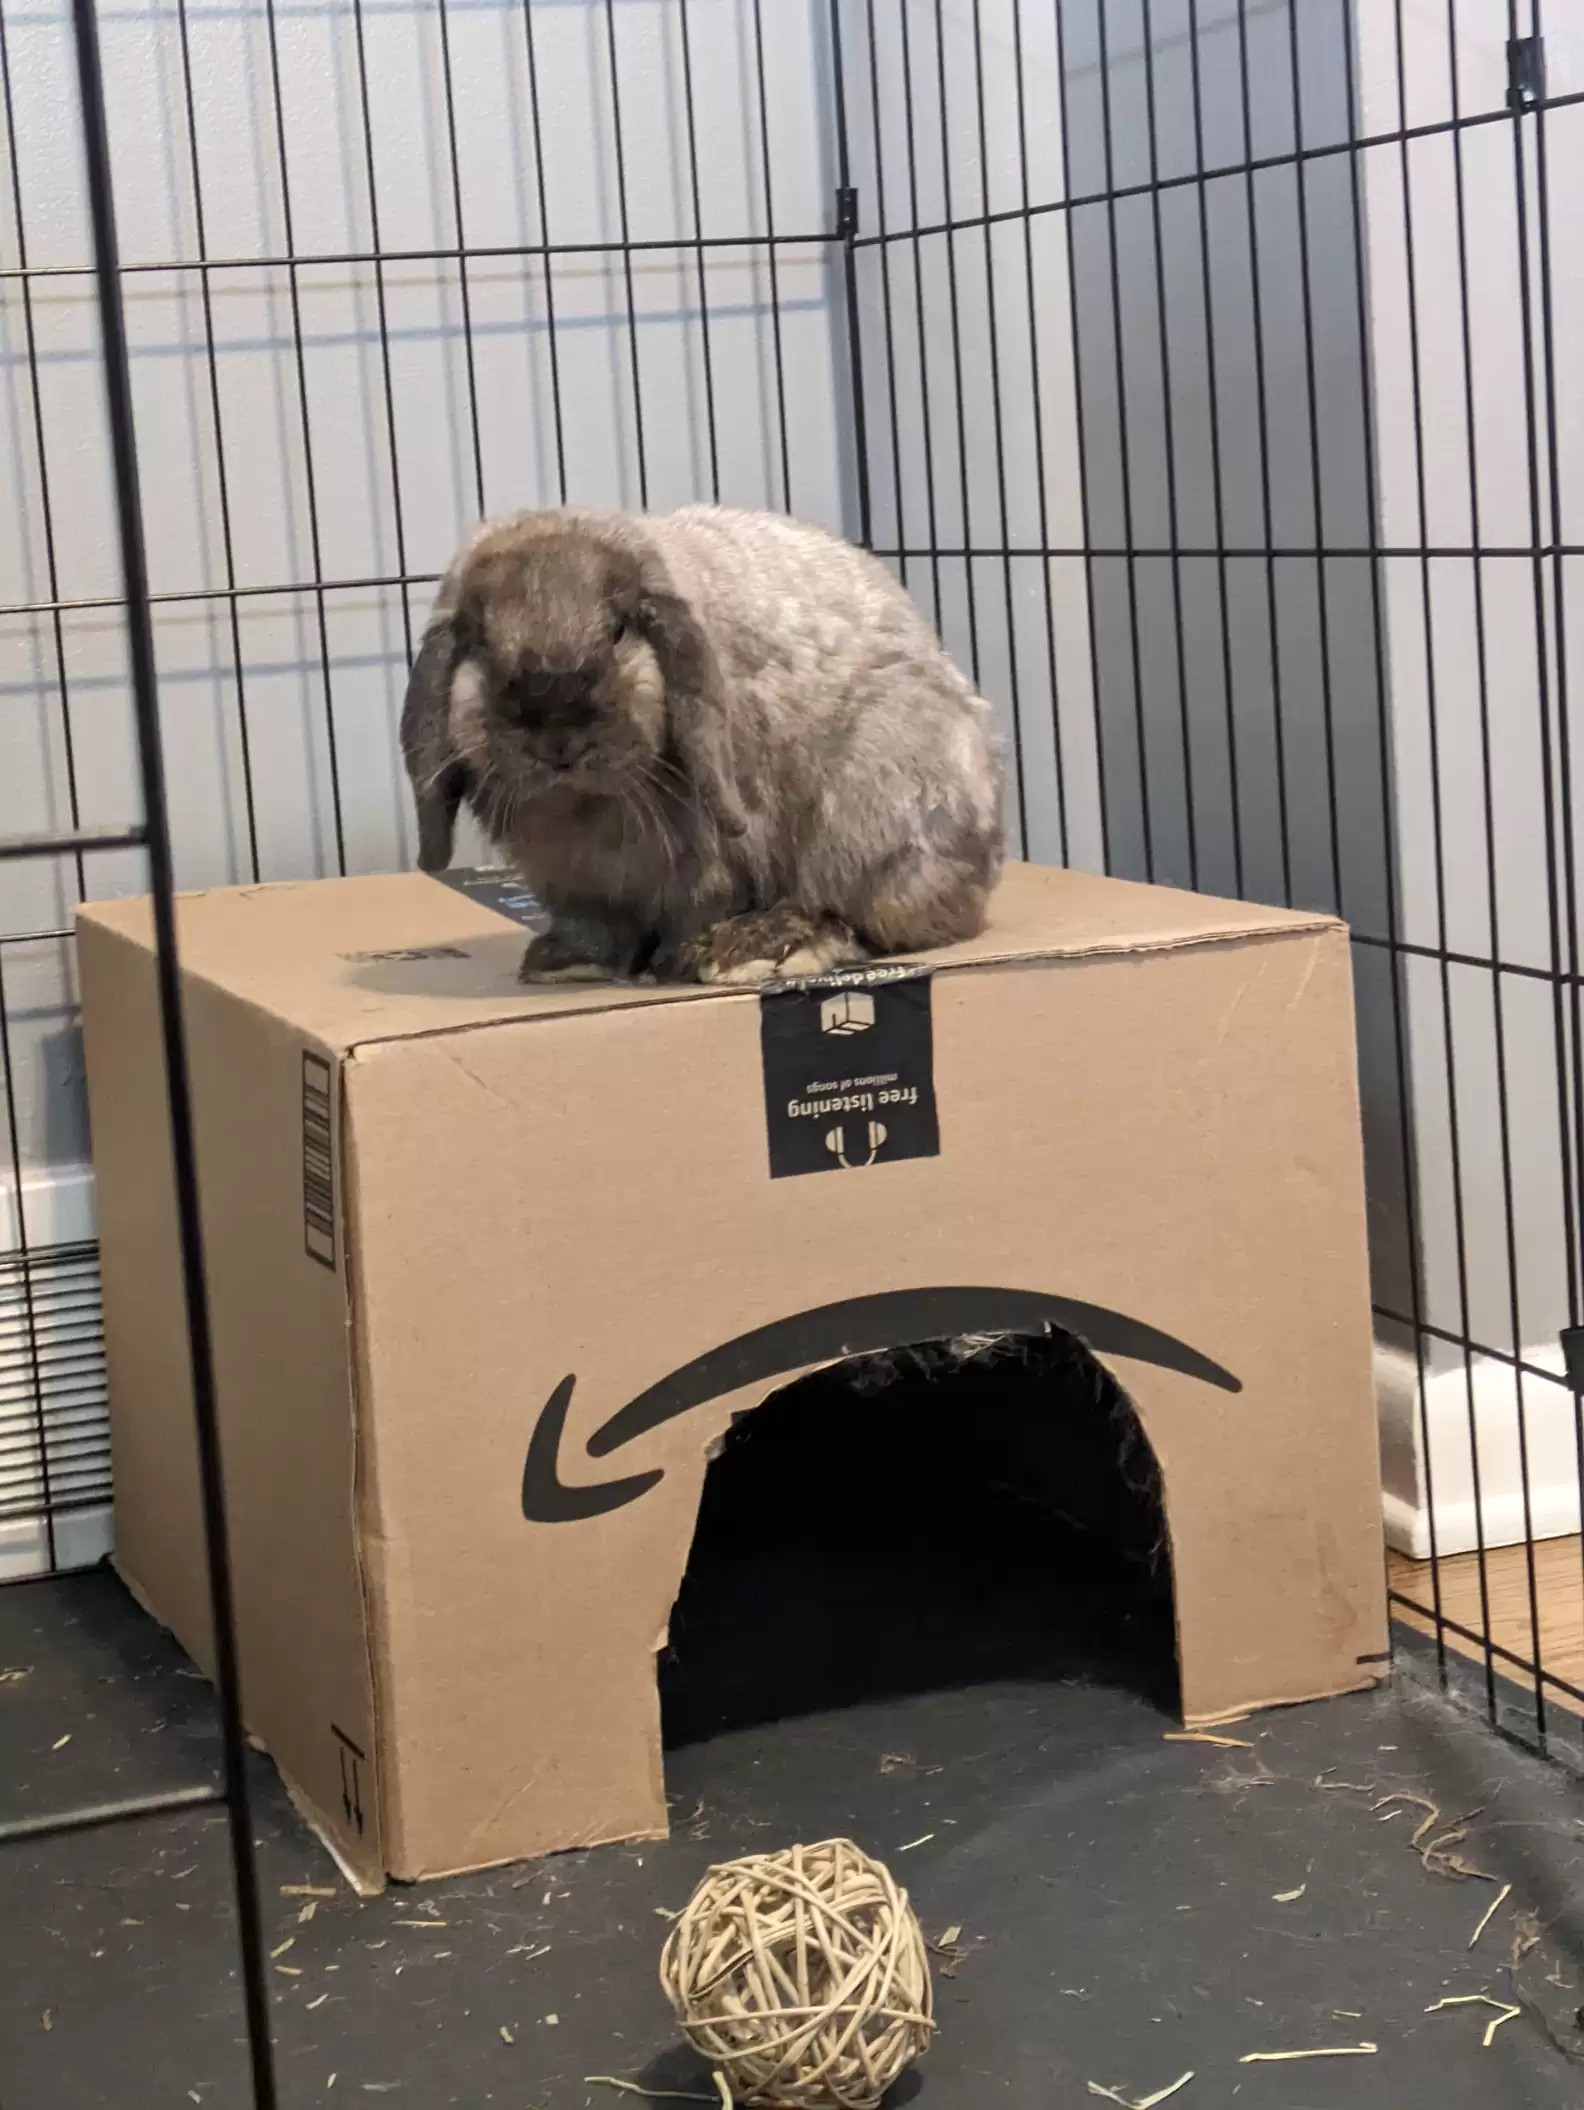 bunny sitting on a box